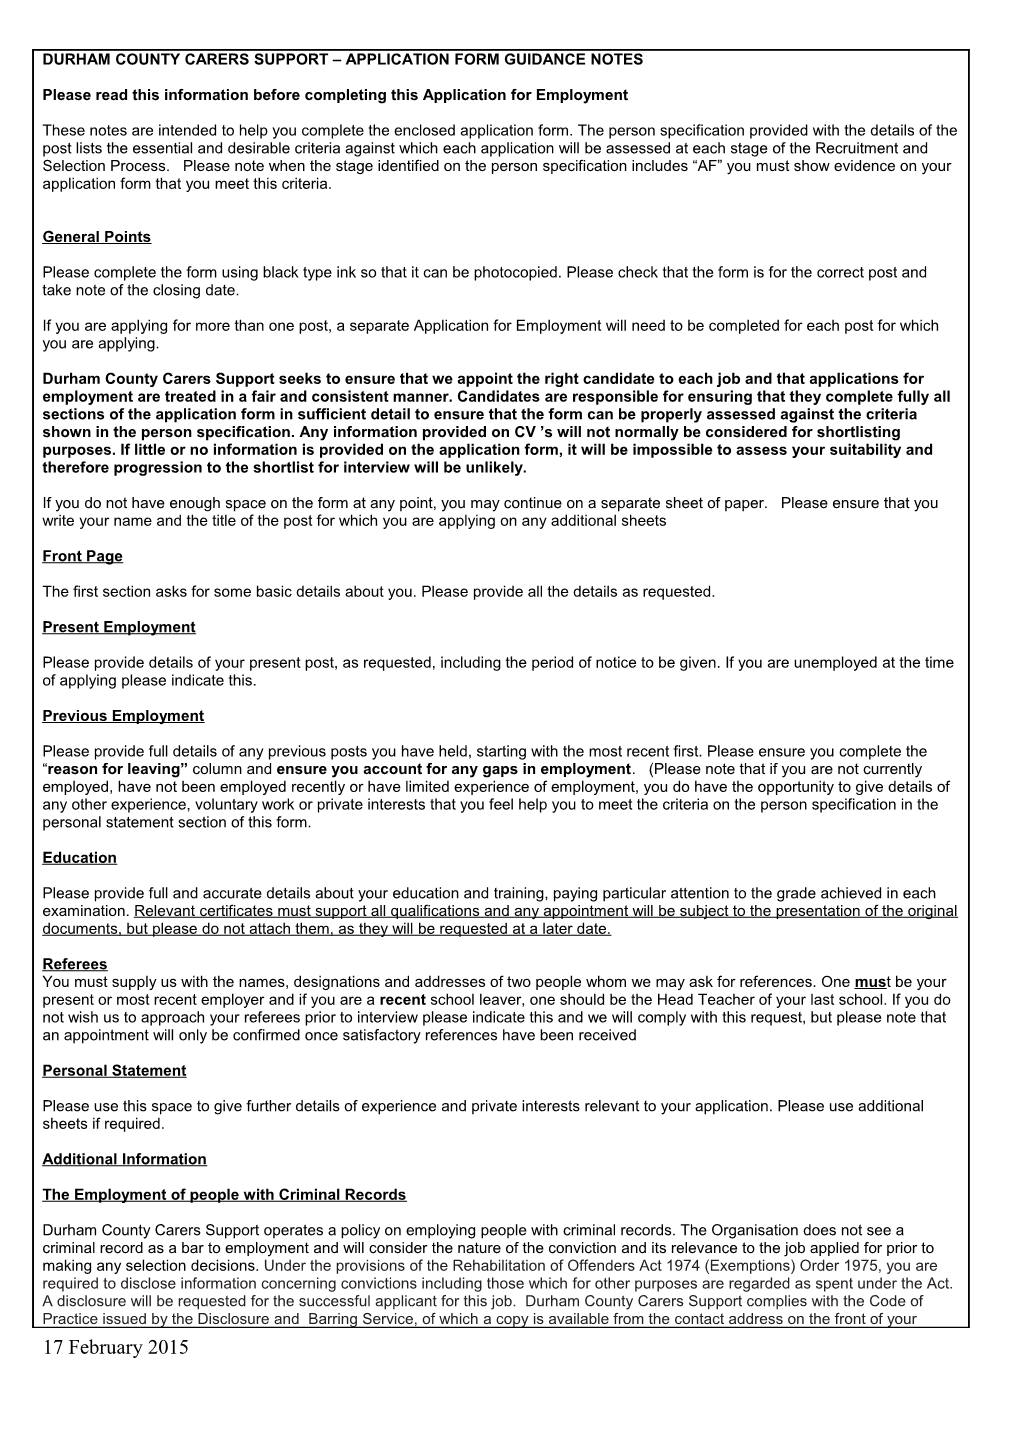 Hurworth School Application Form Guidance Notes